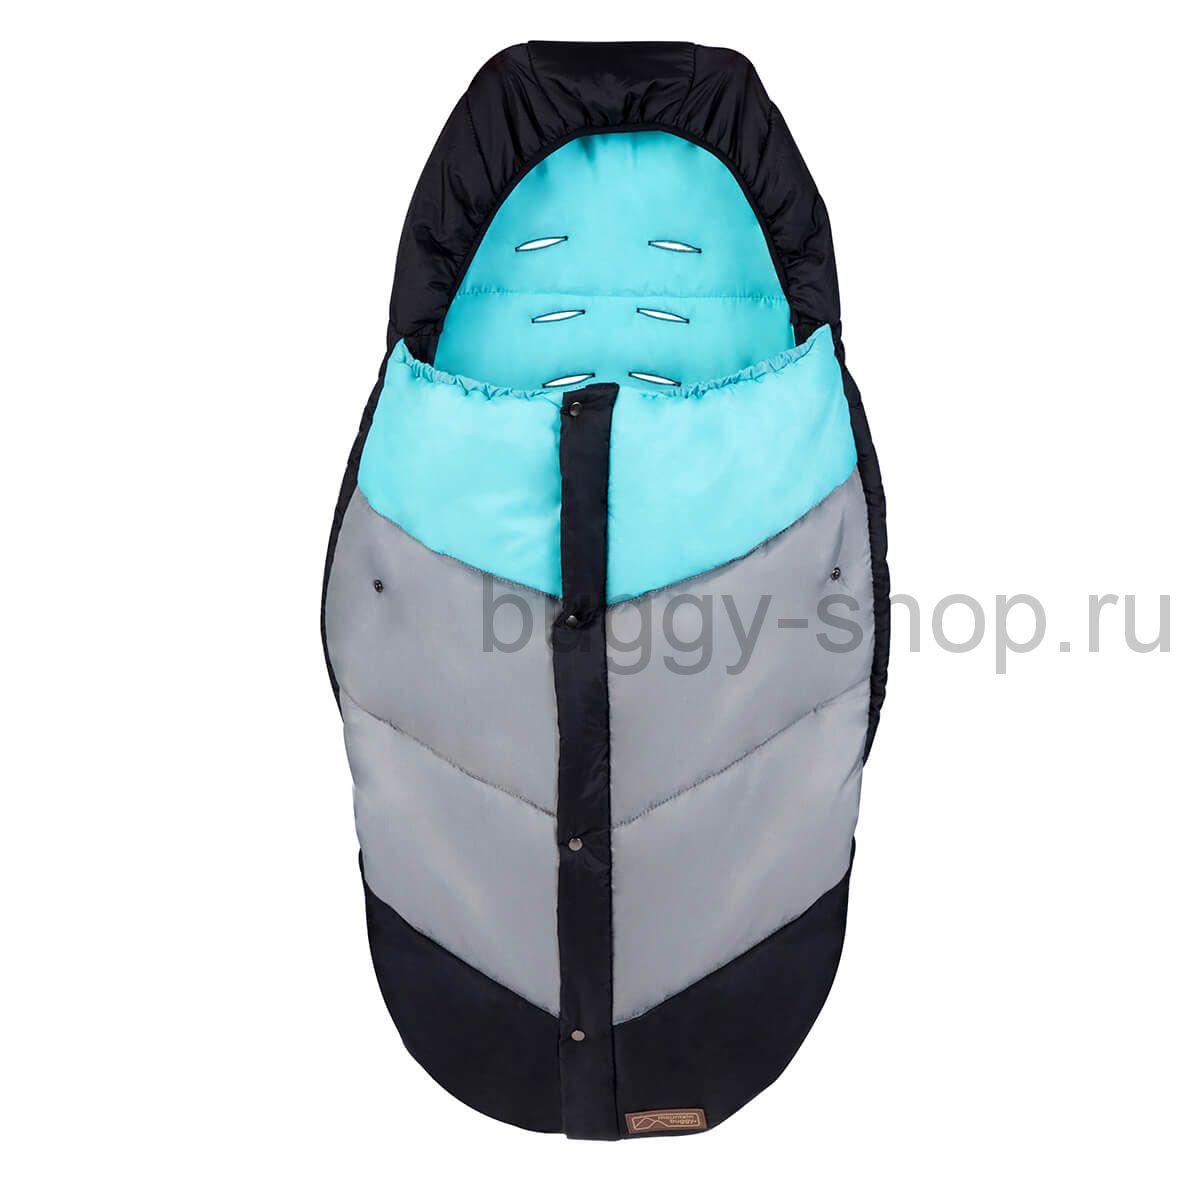 mountain buggy duet sleeping bag